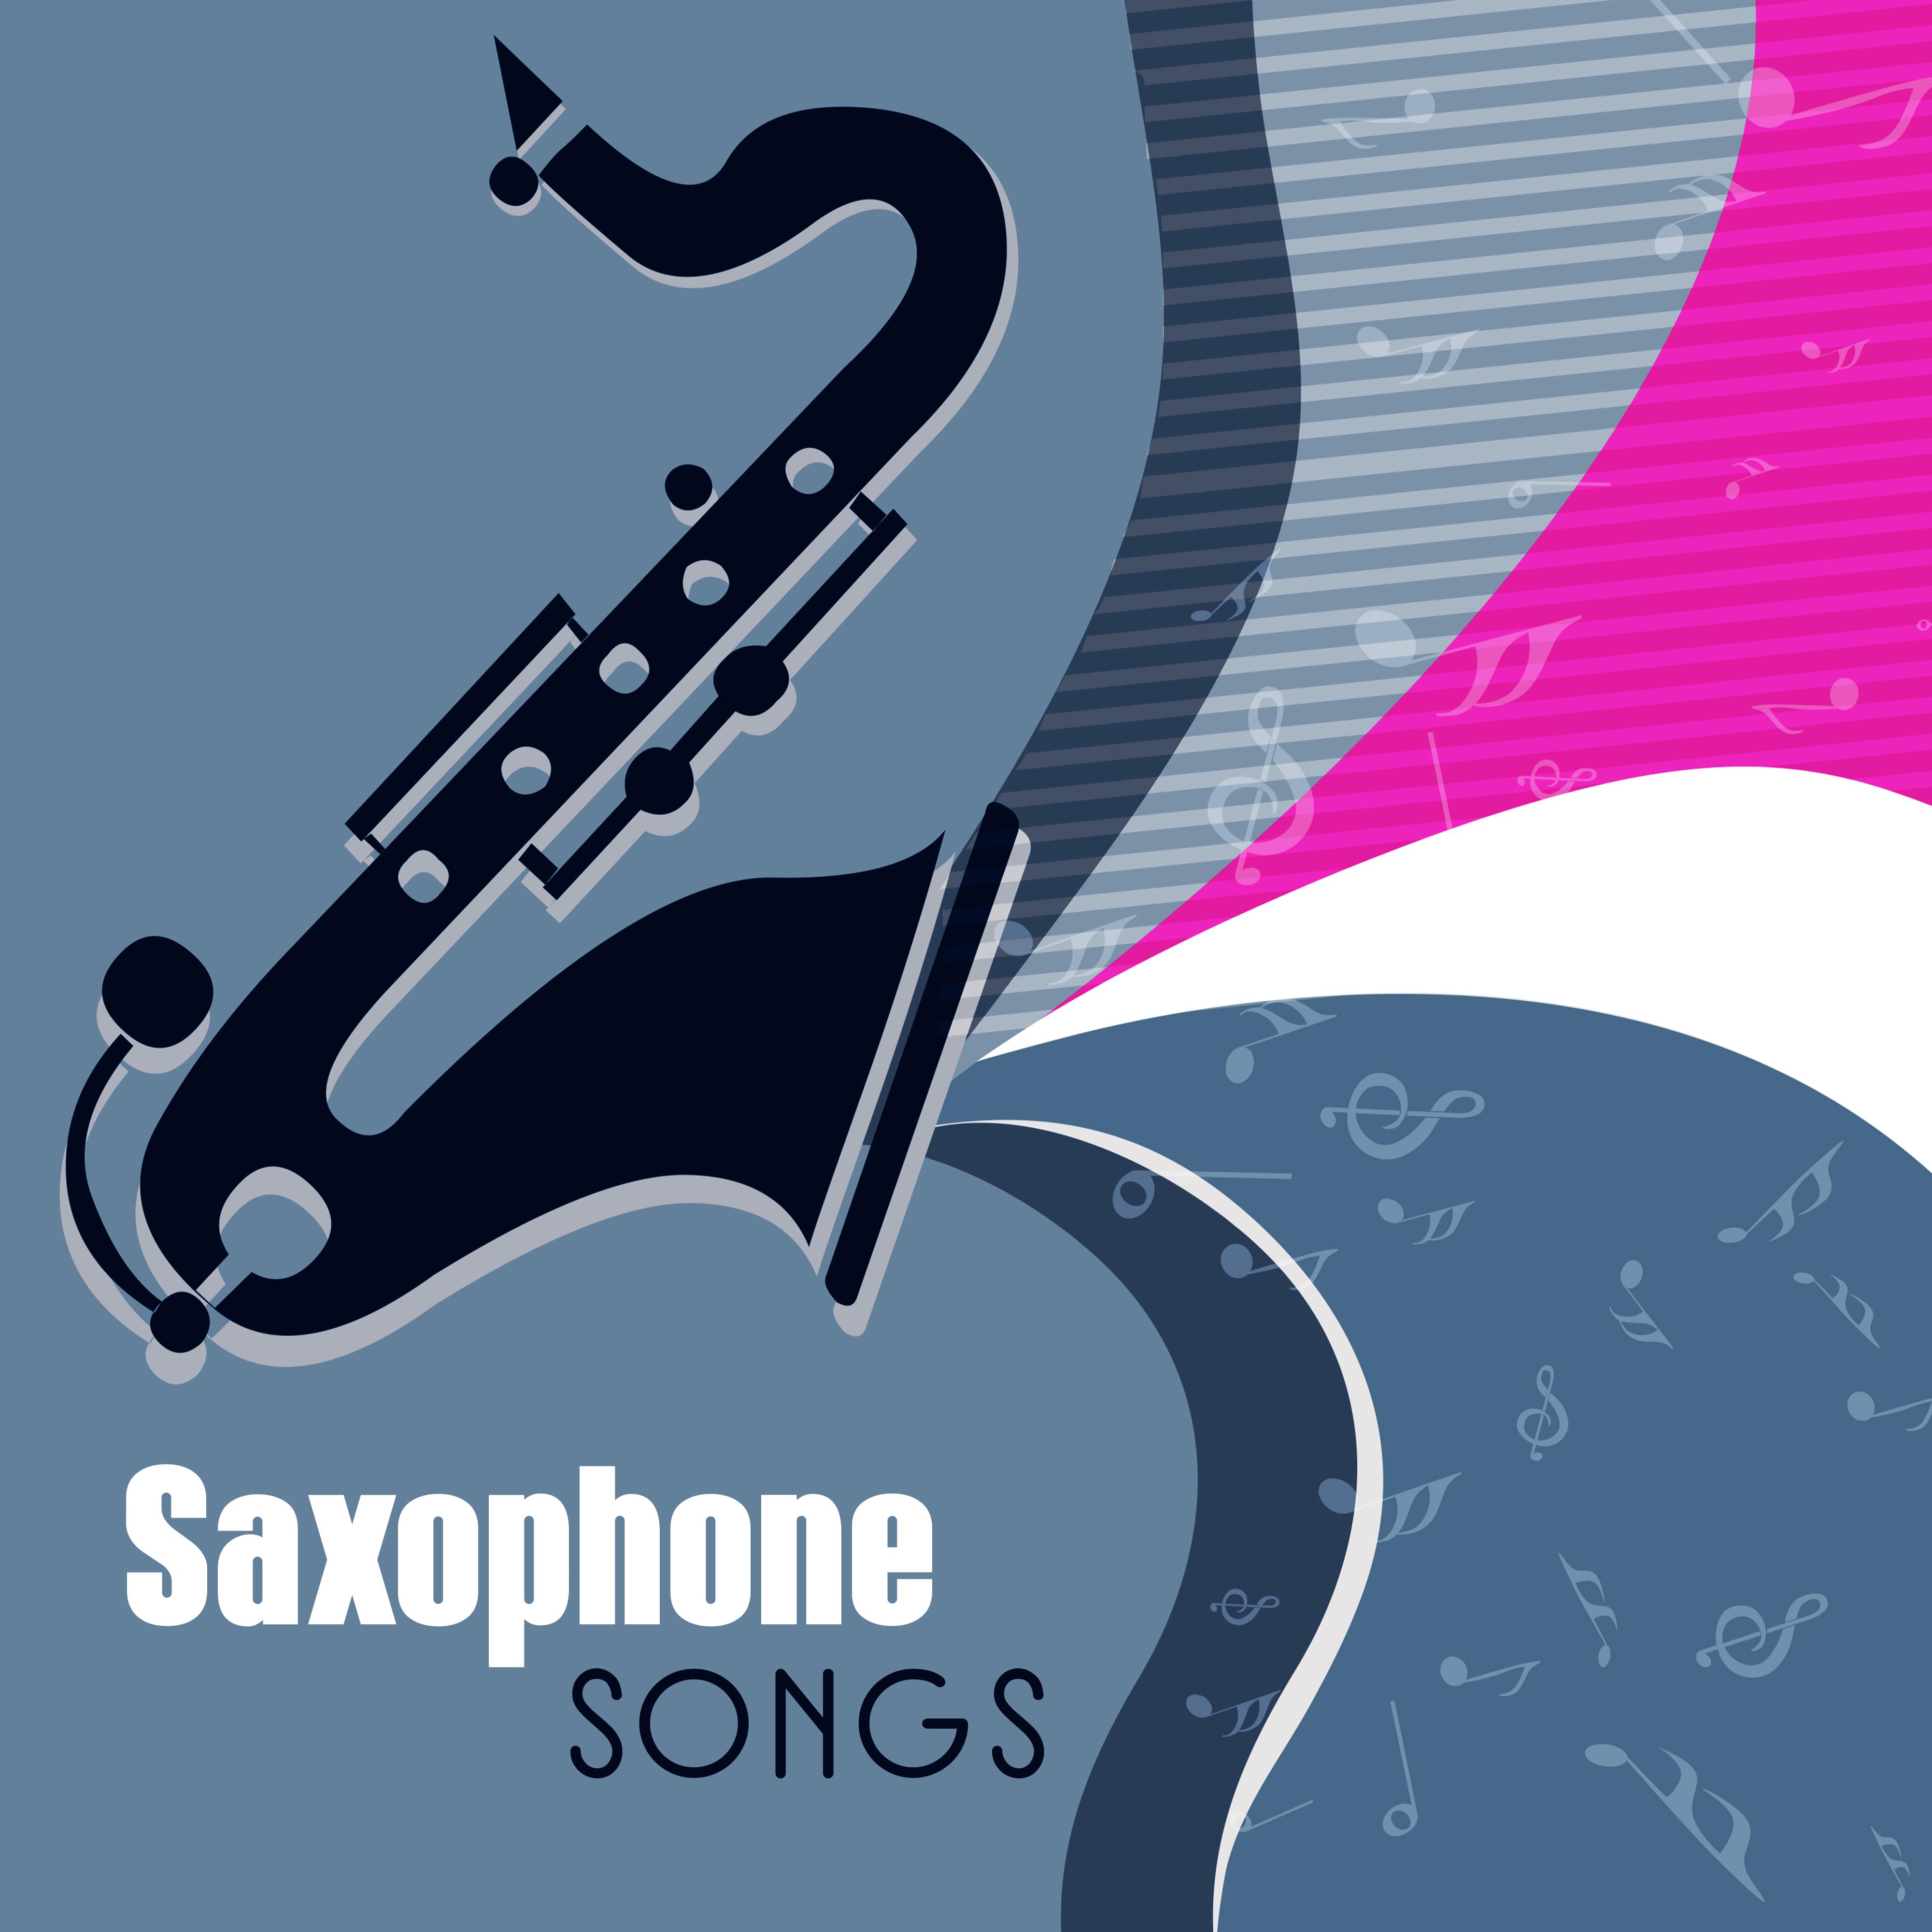 Saxophone Songs – **** Jazz Lounge, Instrumental Songs, Pure Passion, Romantic Jazz